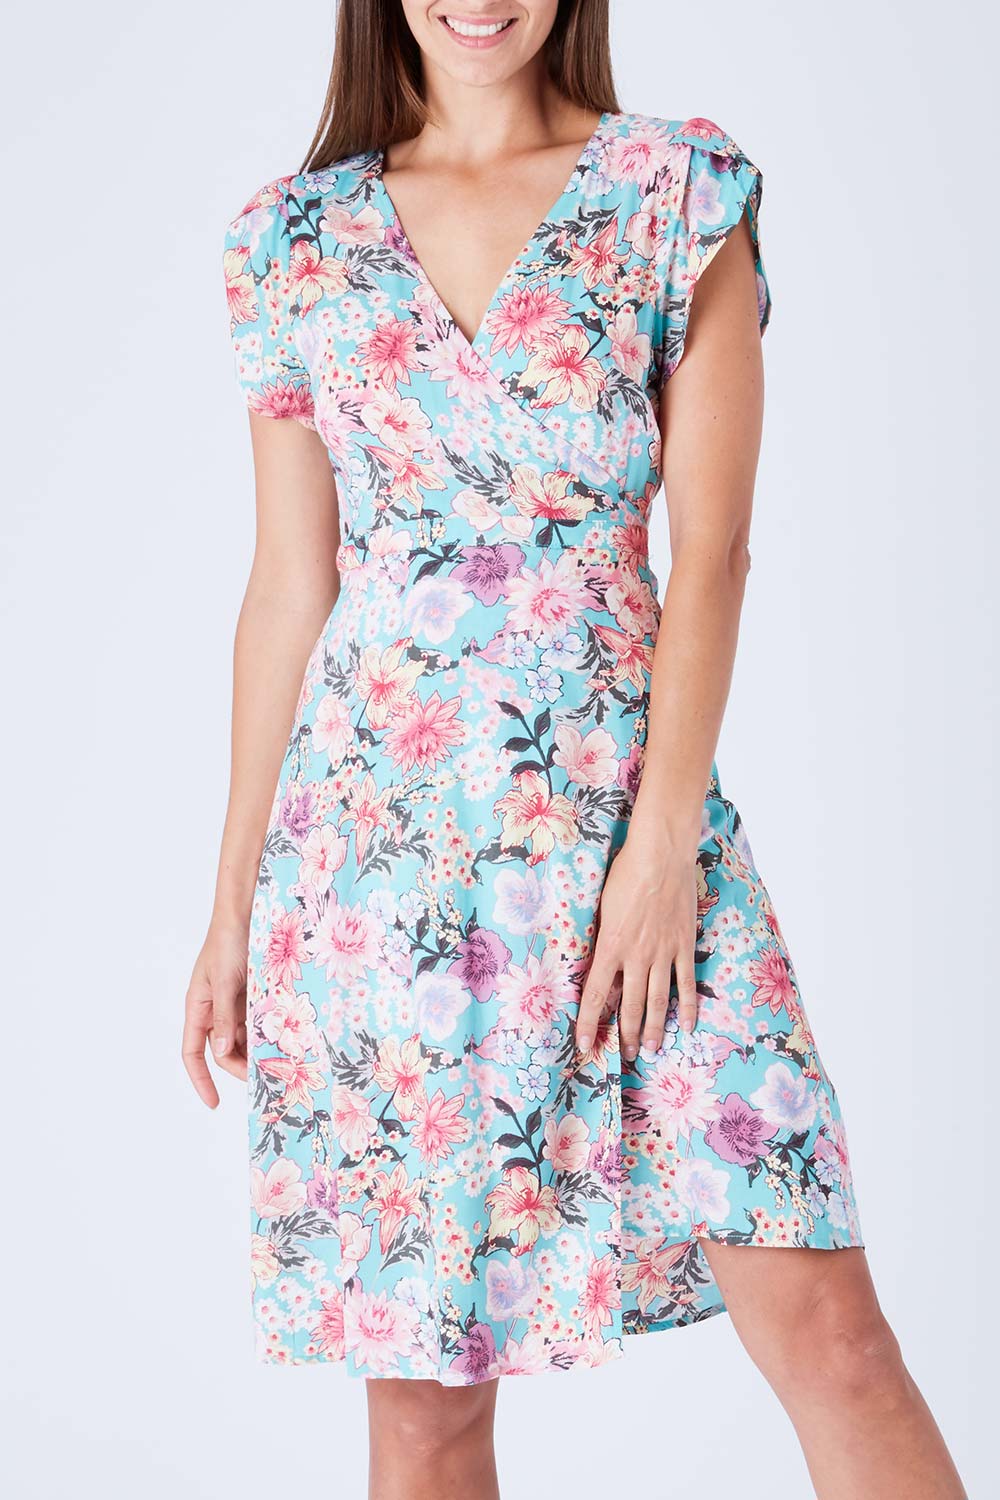 sunny girl floral dress